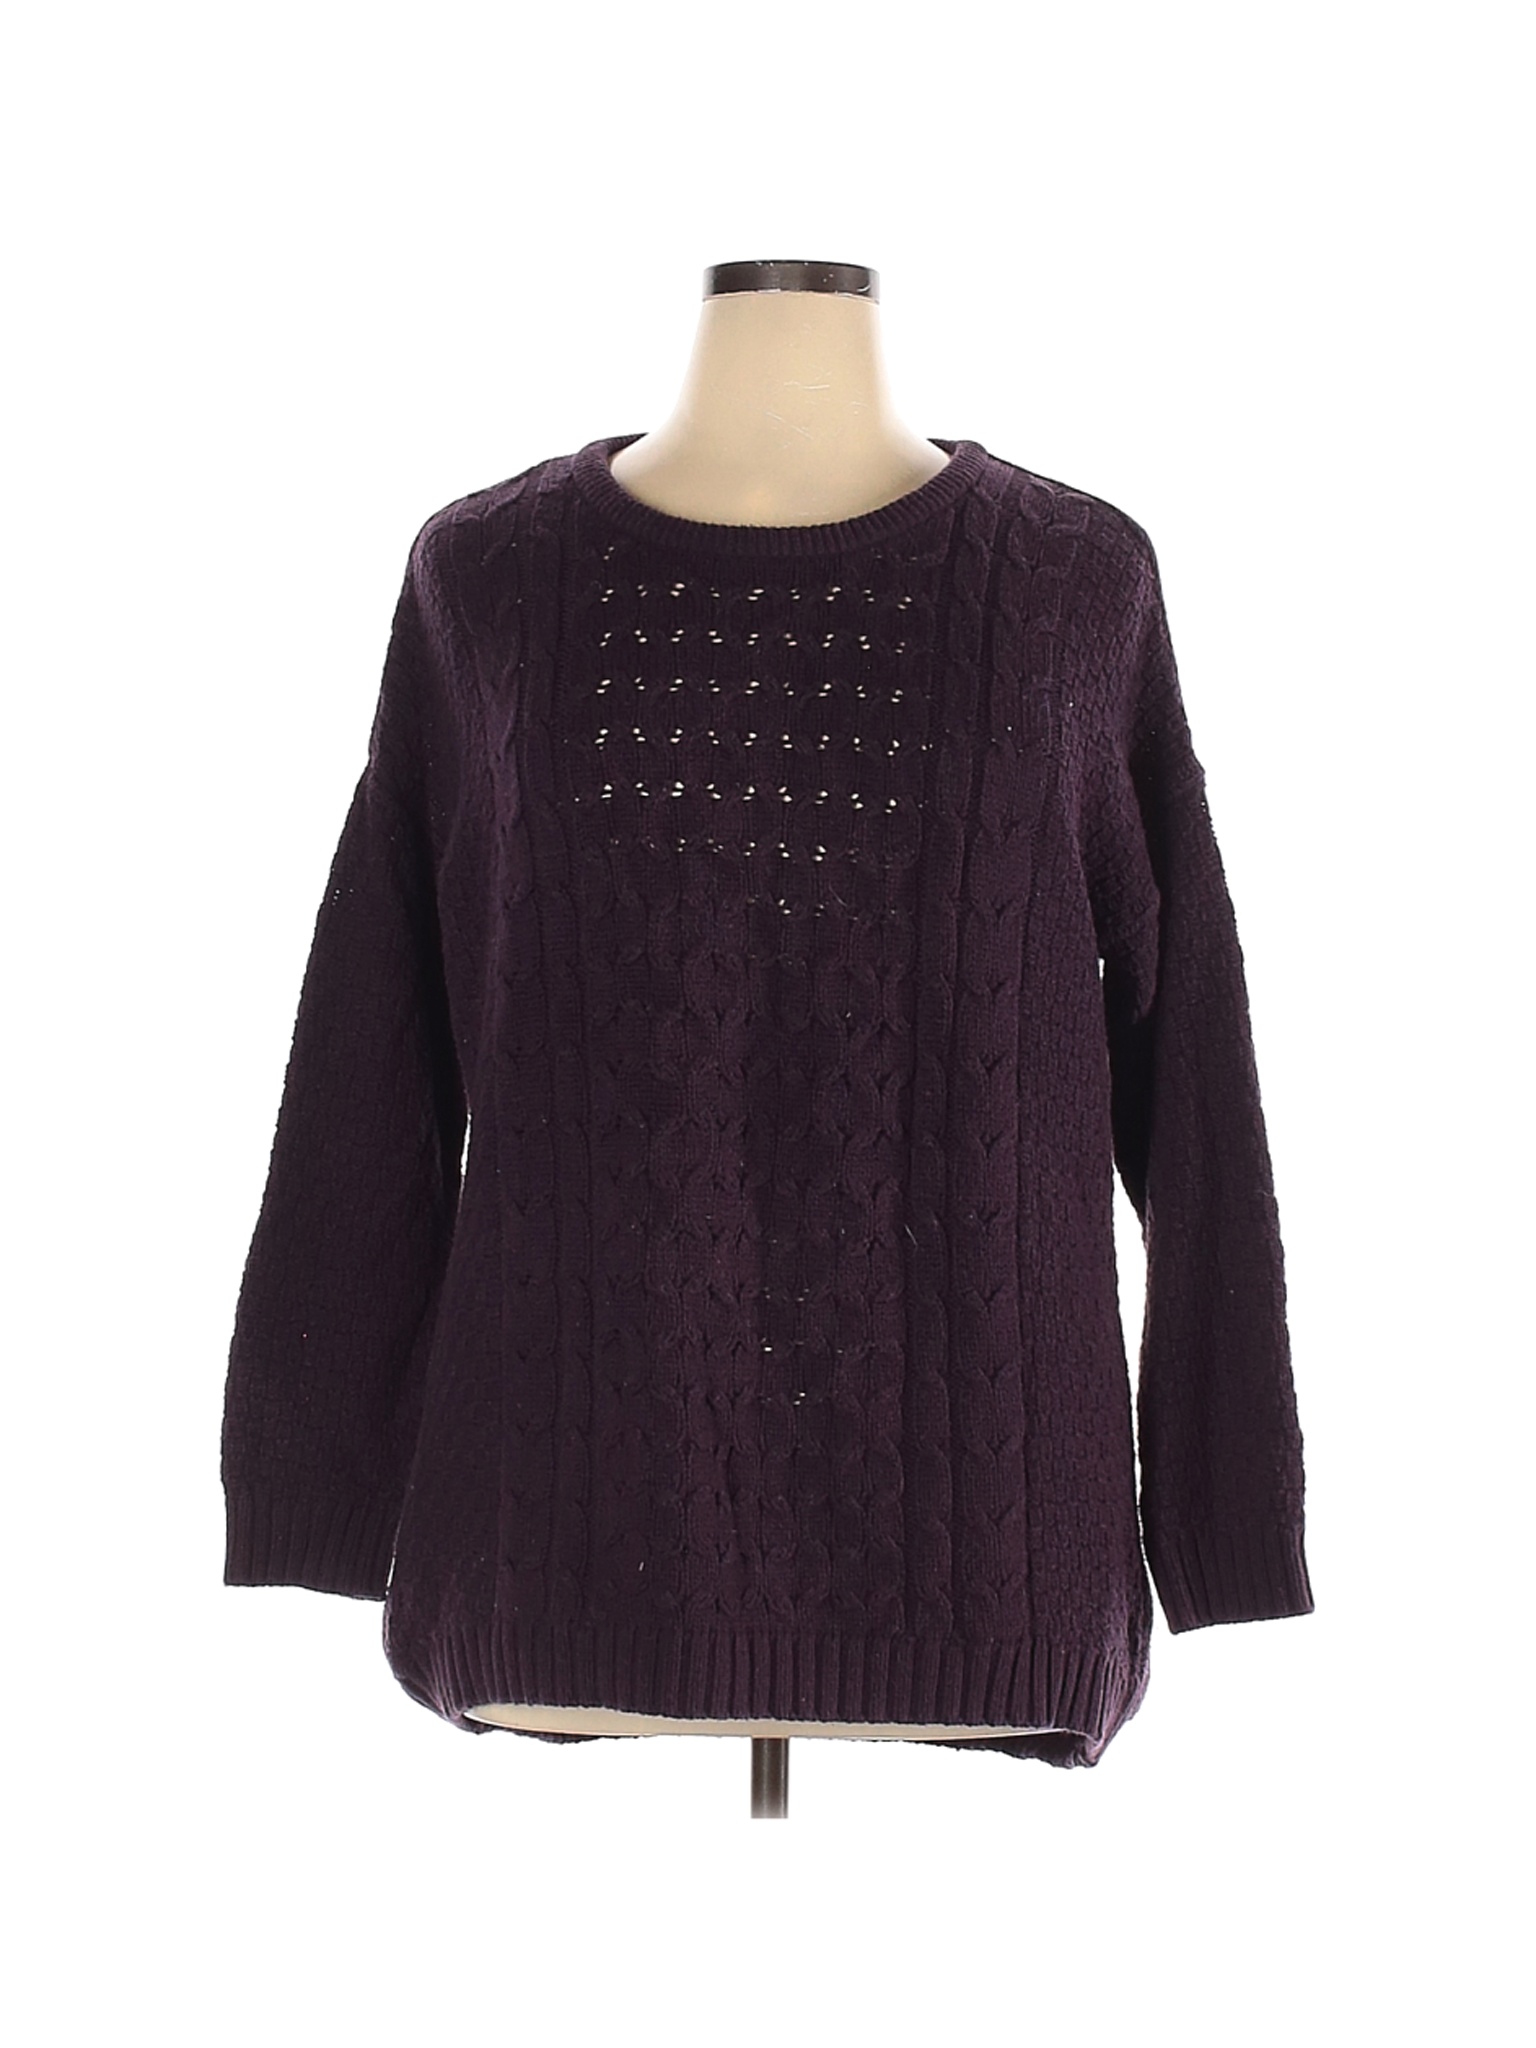 Old Navy Women Purple Pullover Sweater XL | eBay